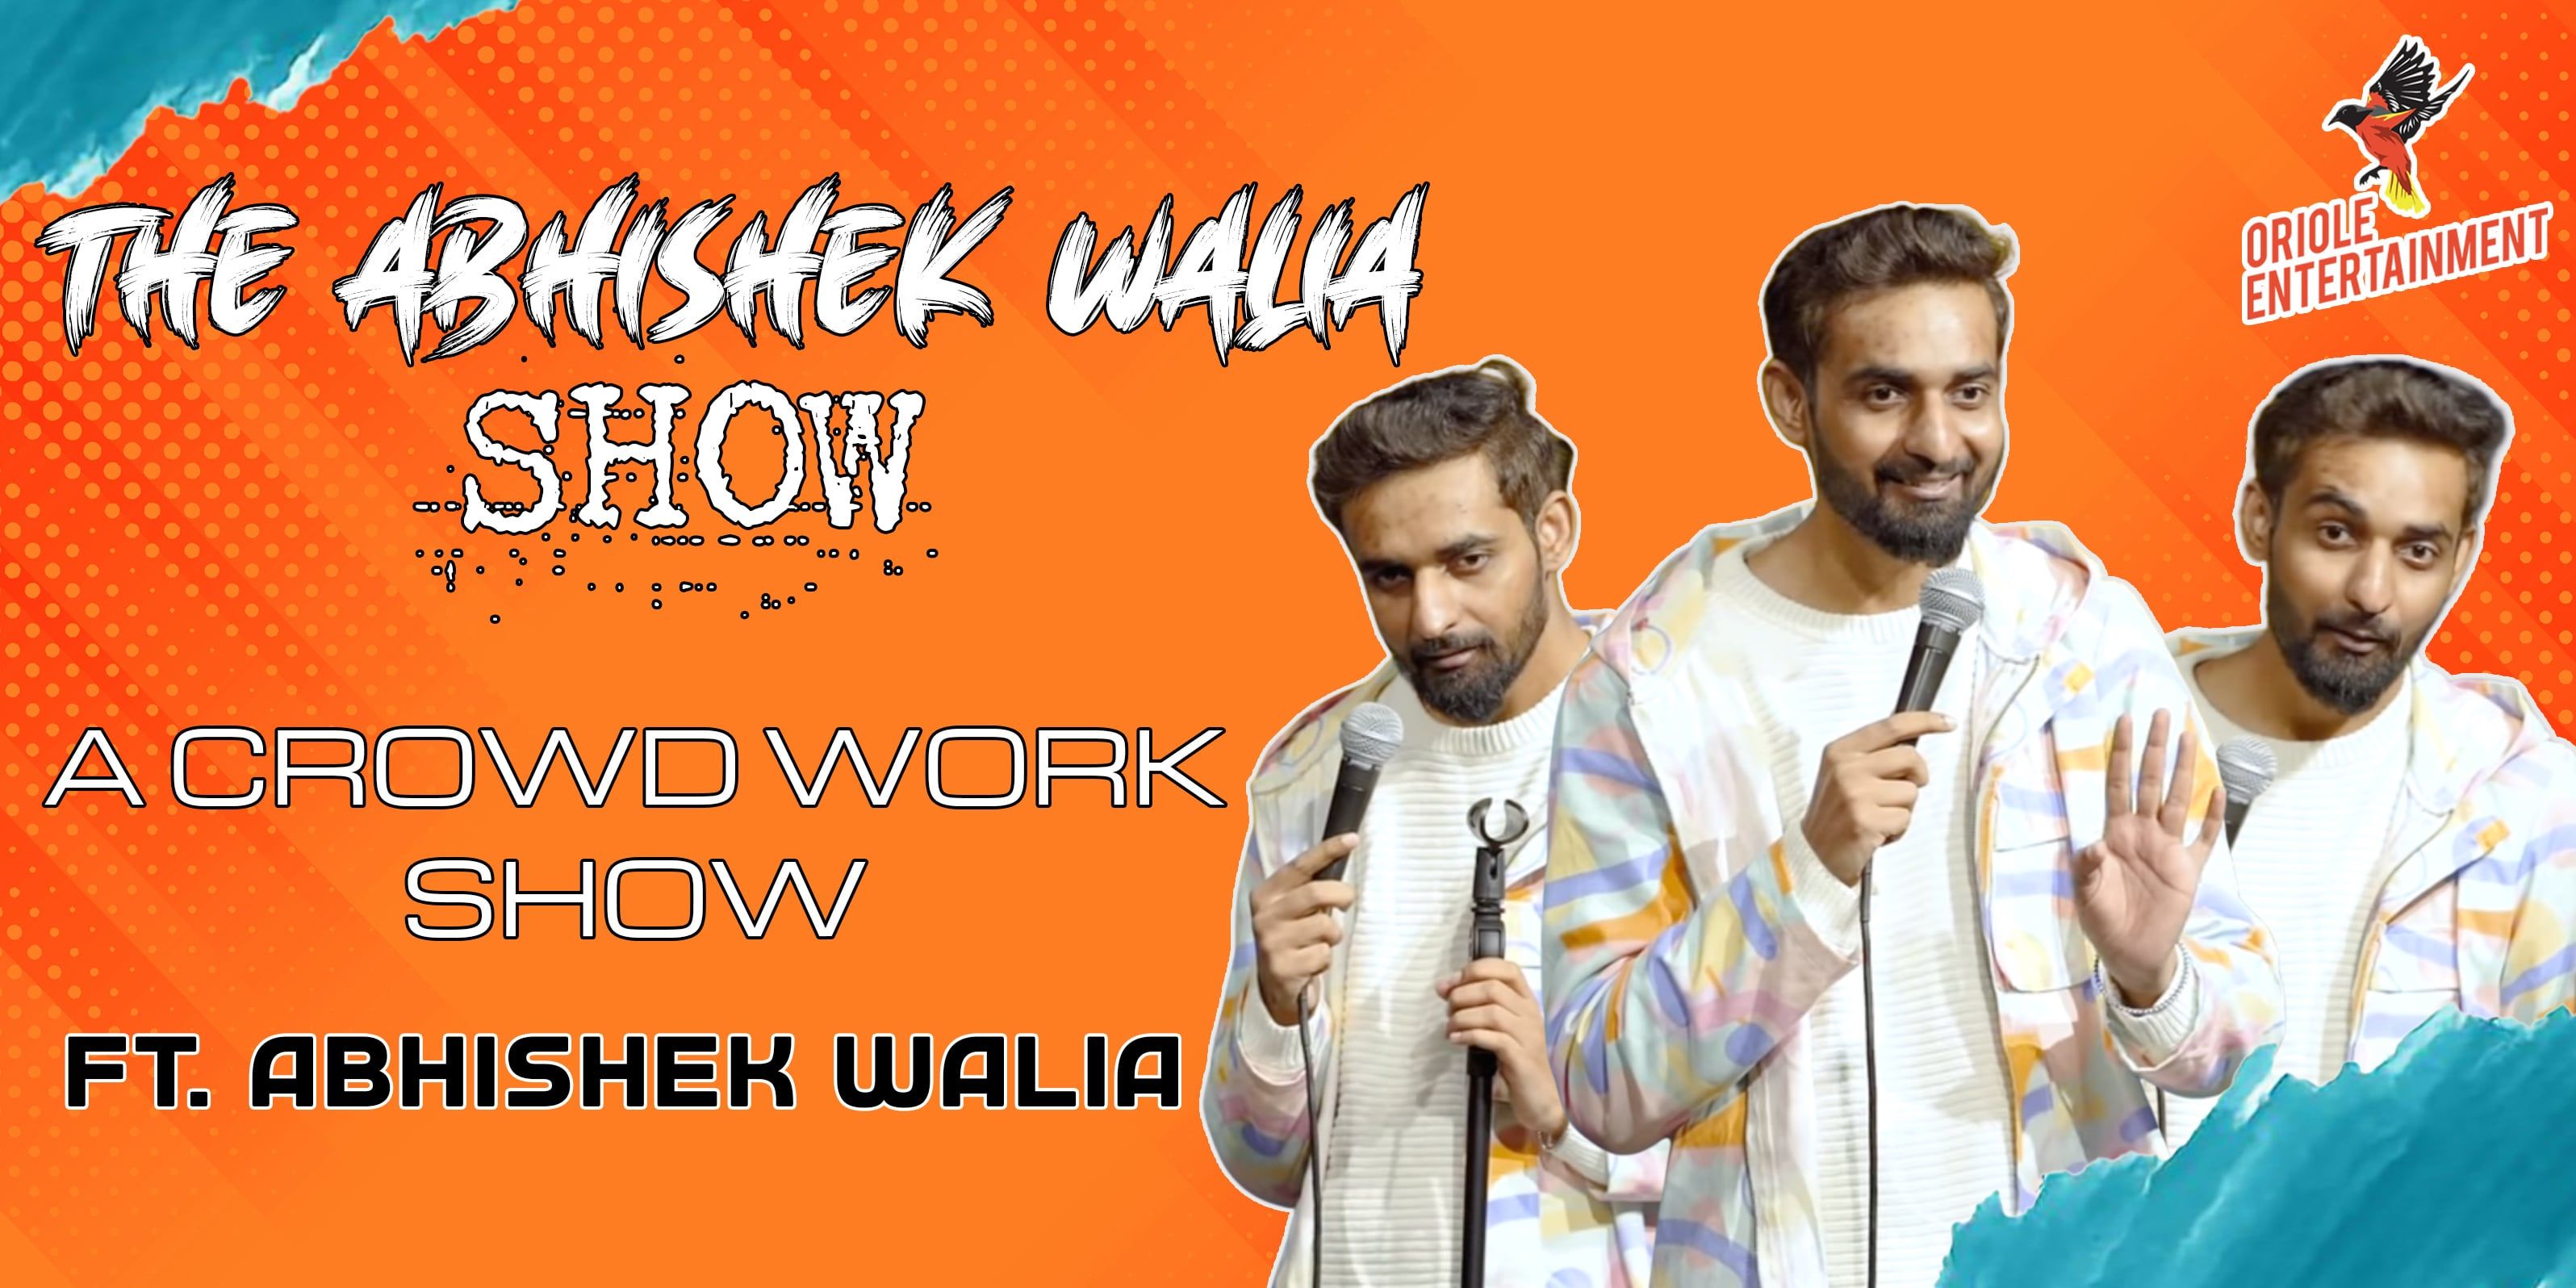 The Abhishek Walia Show in New Delhi